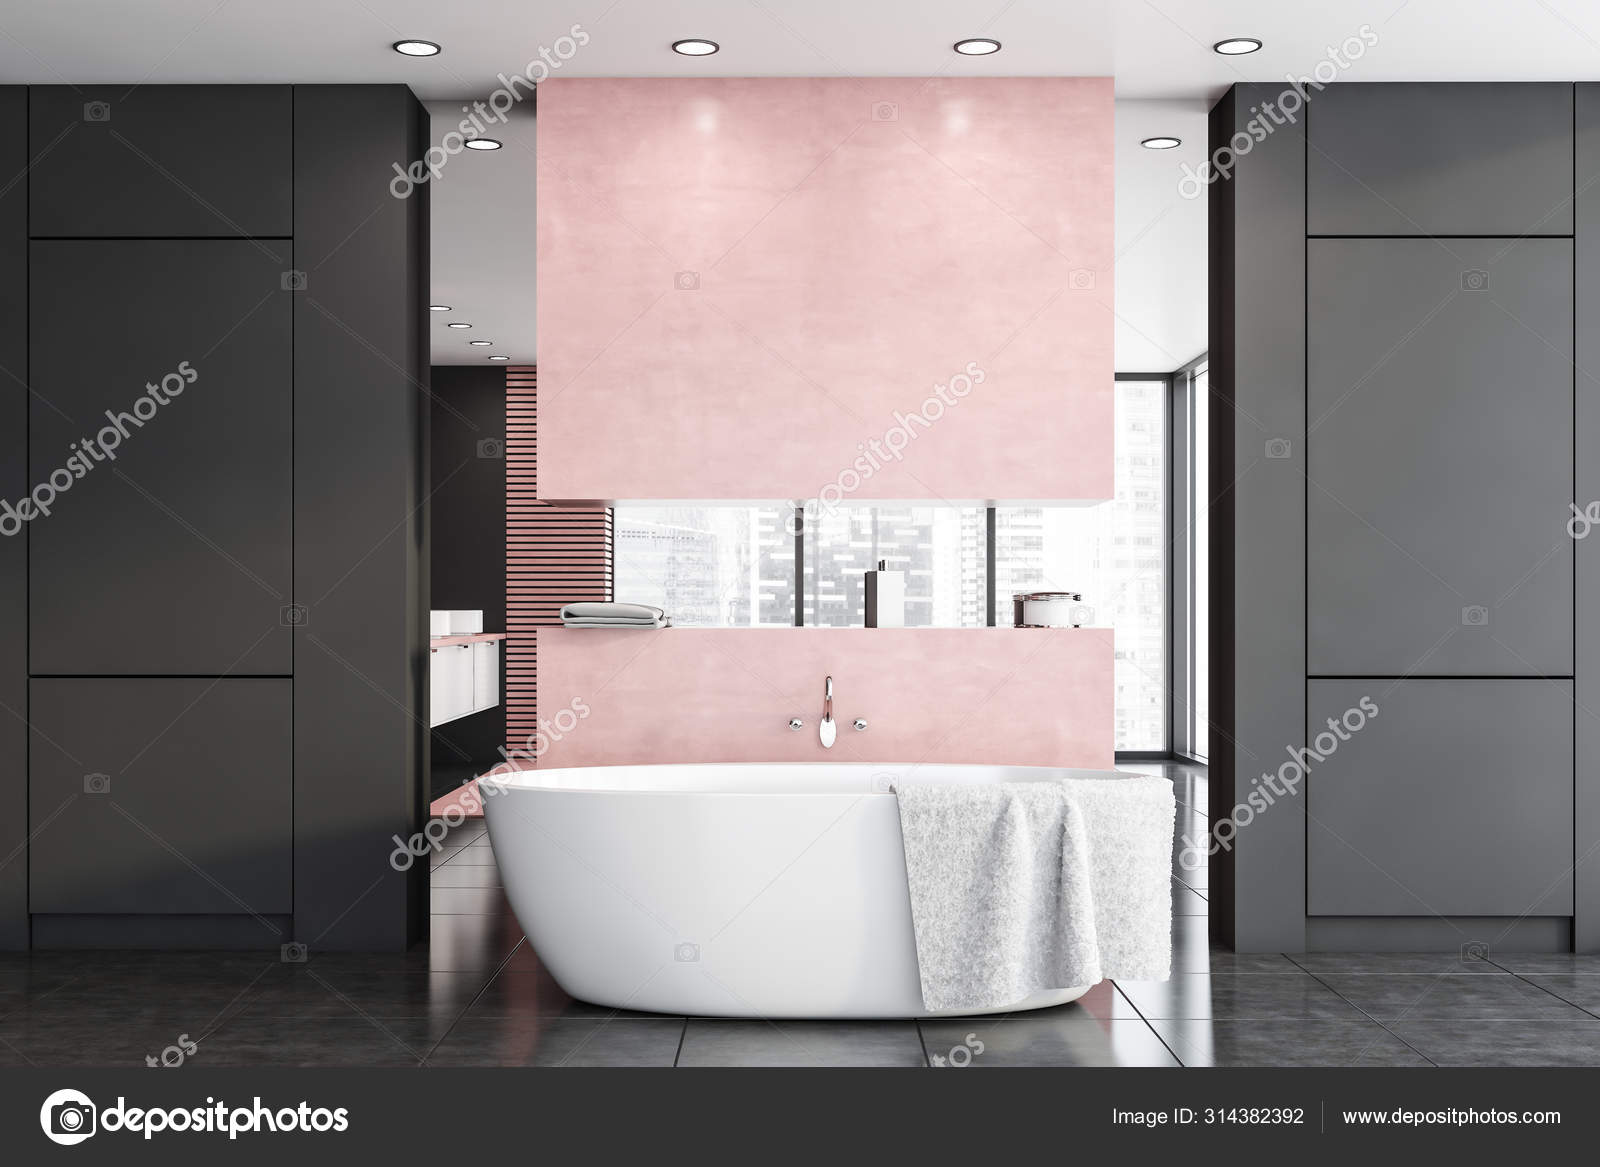 Pink Bathroom Interior With Tub Stock, Pink And Grey Bathroom